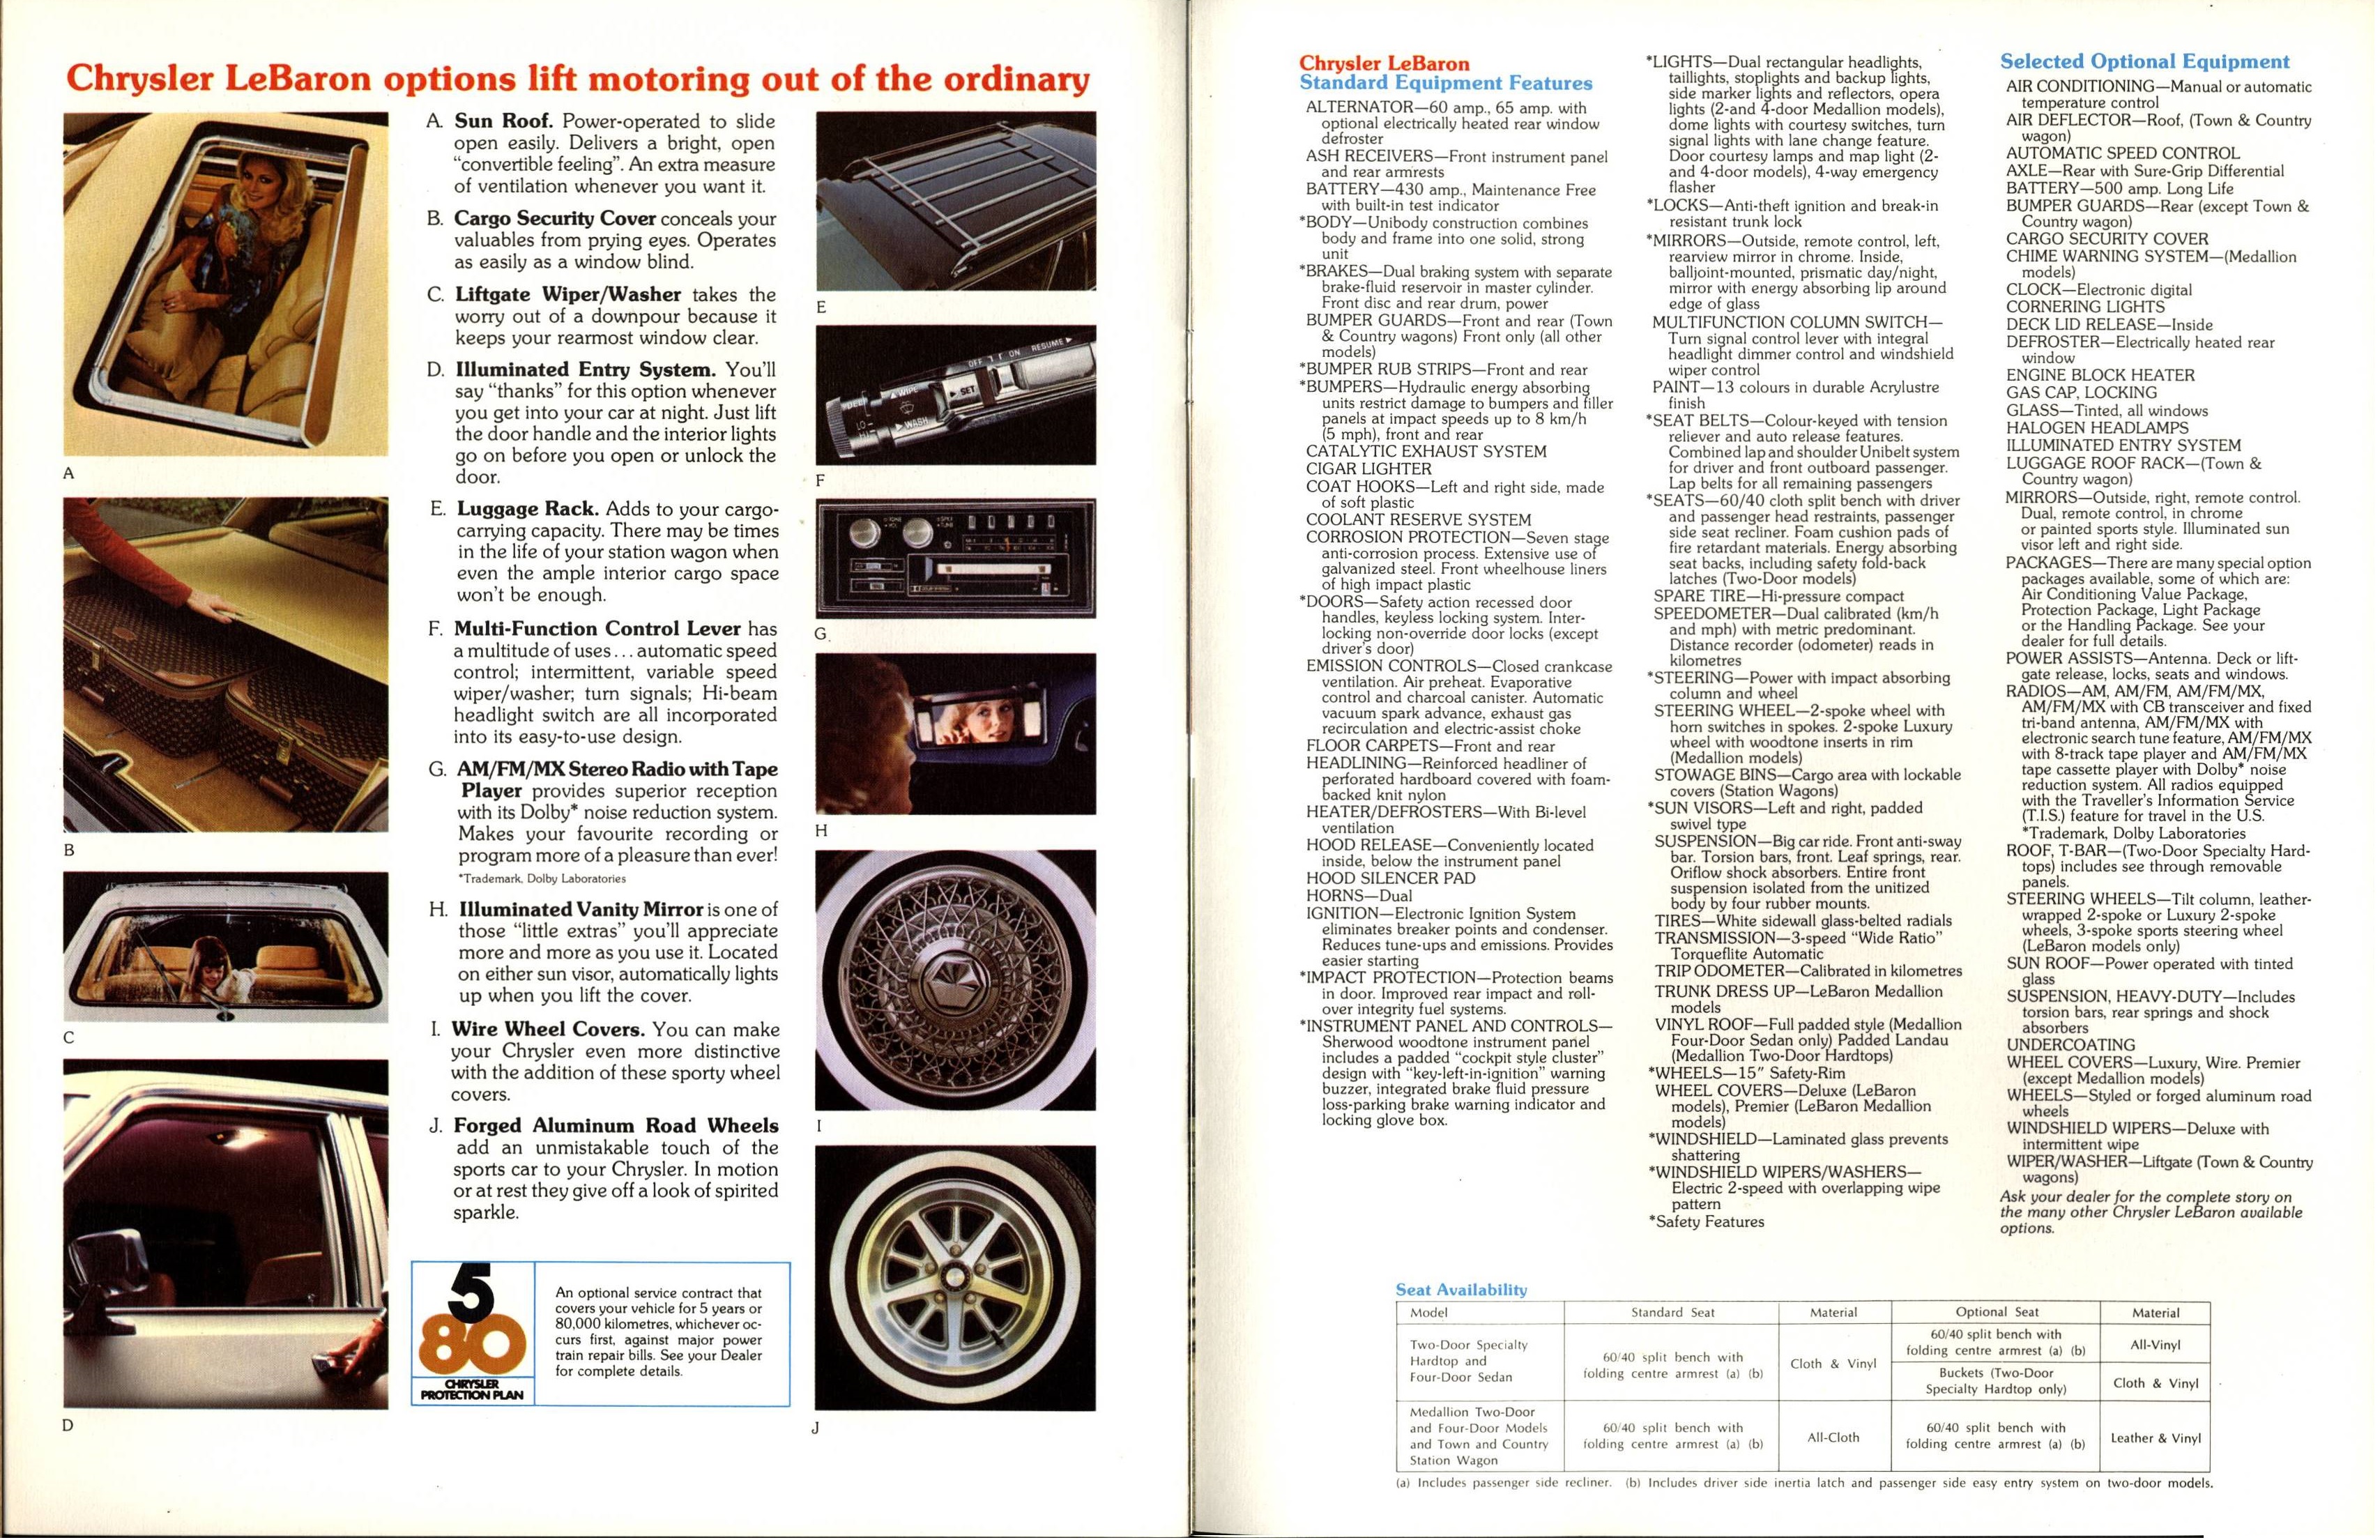 1981 Chrysler LeBaron Brochure (Cdn) 06-07